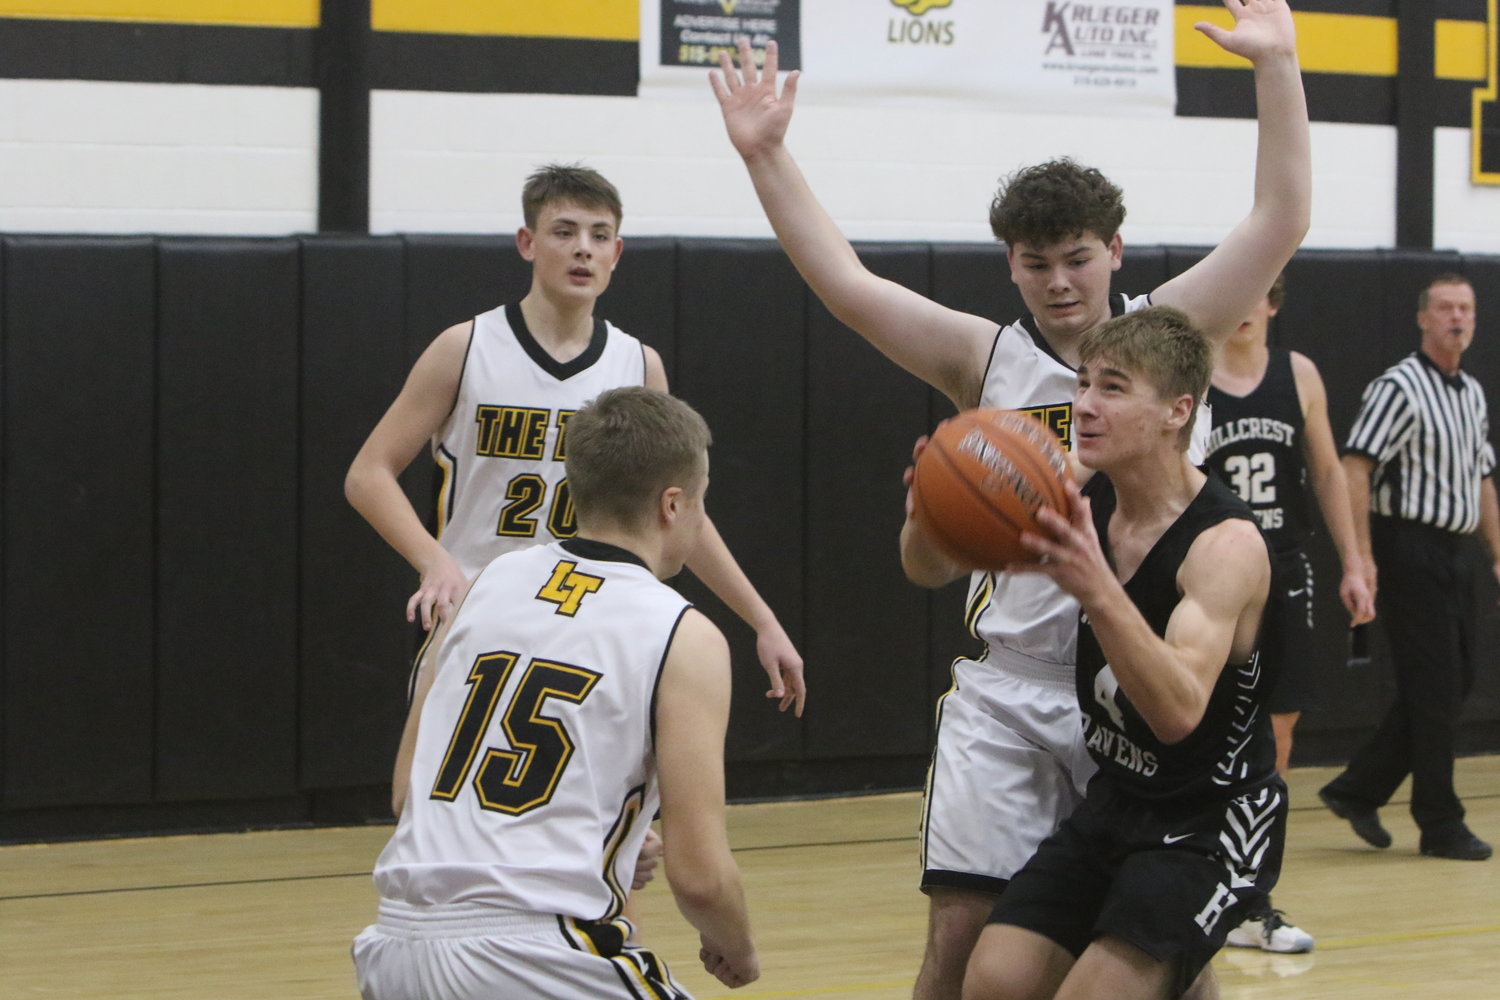 Hillcrest Academy's Luke Schrock splits the Lone Tree defense on his way toward the basket.